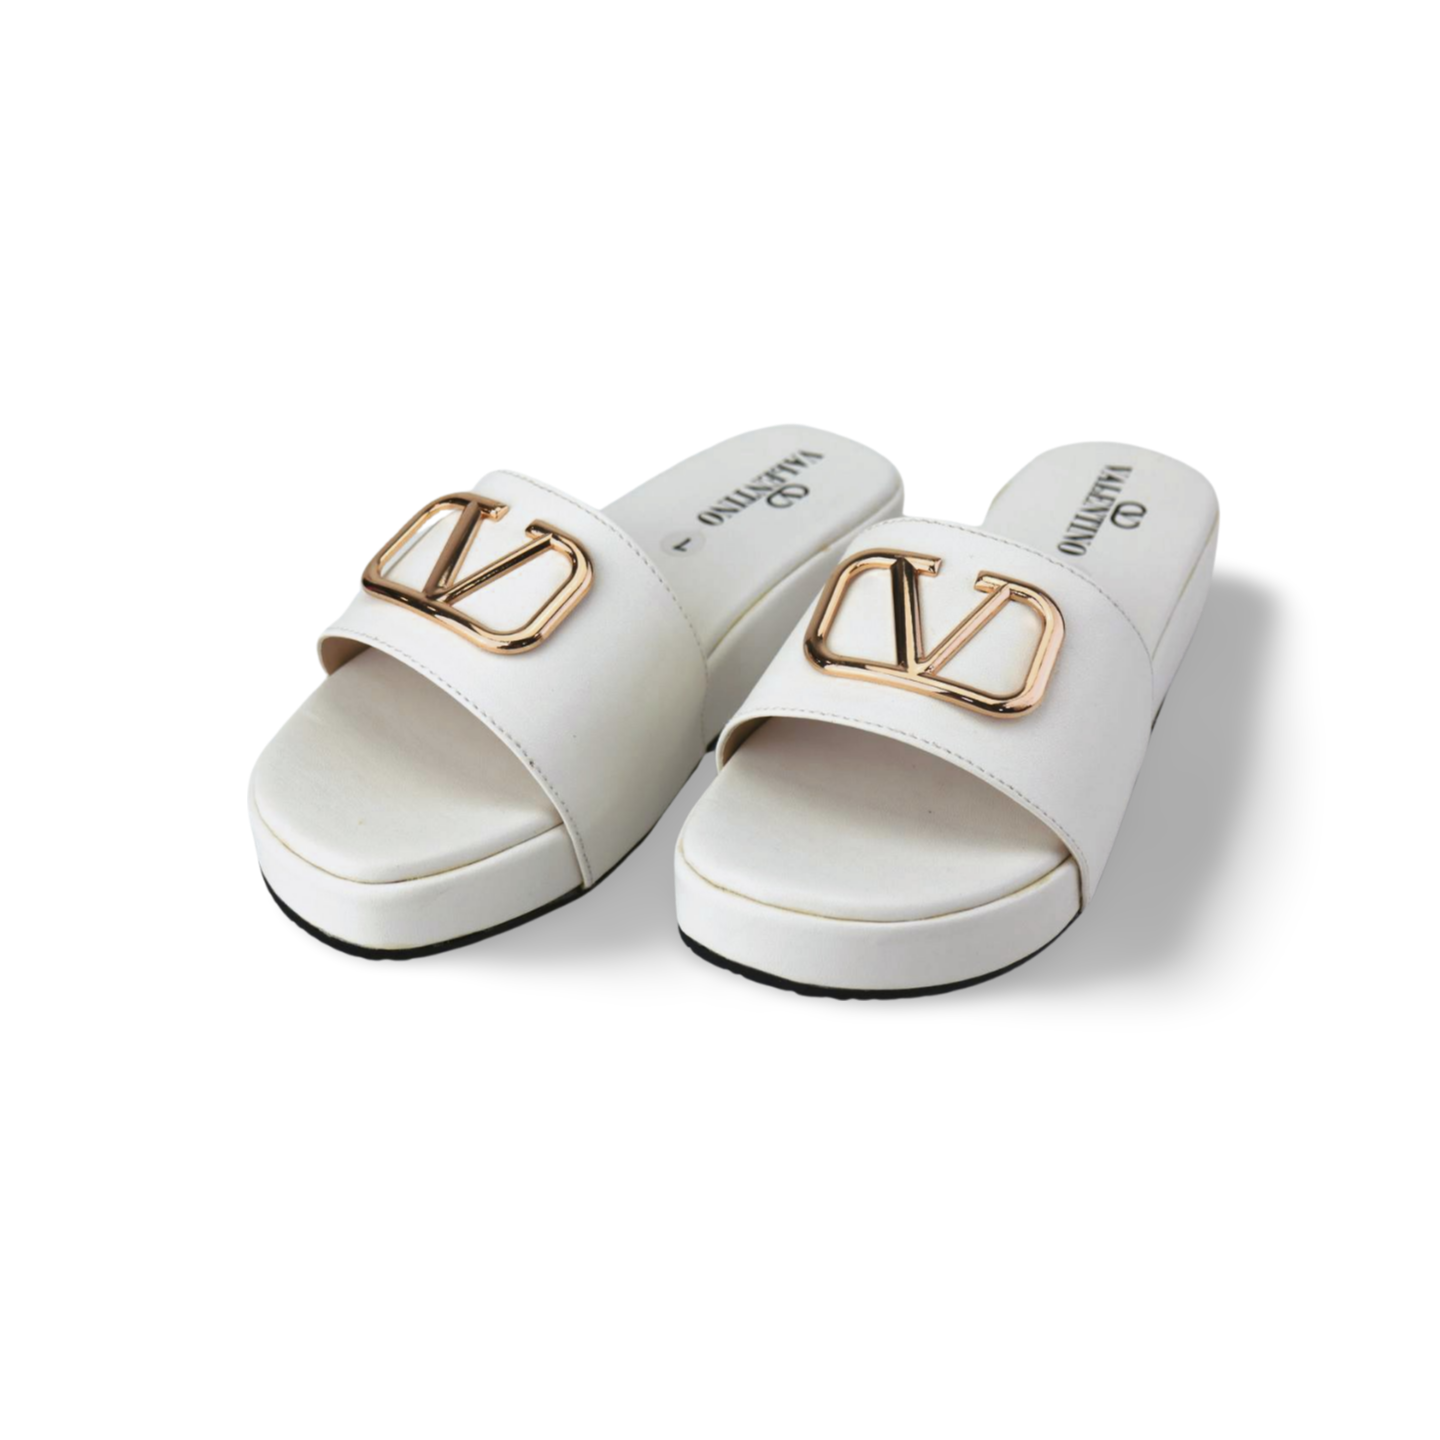 Stylish Vlogo Wedge Sandals For Women